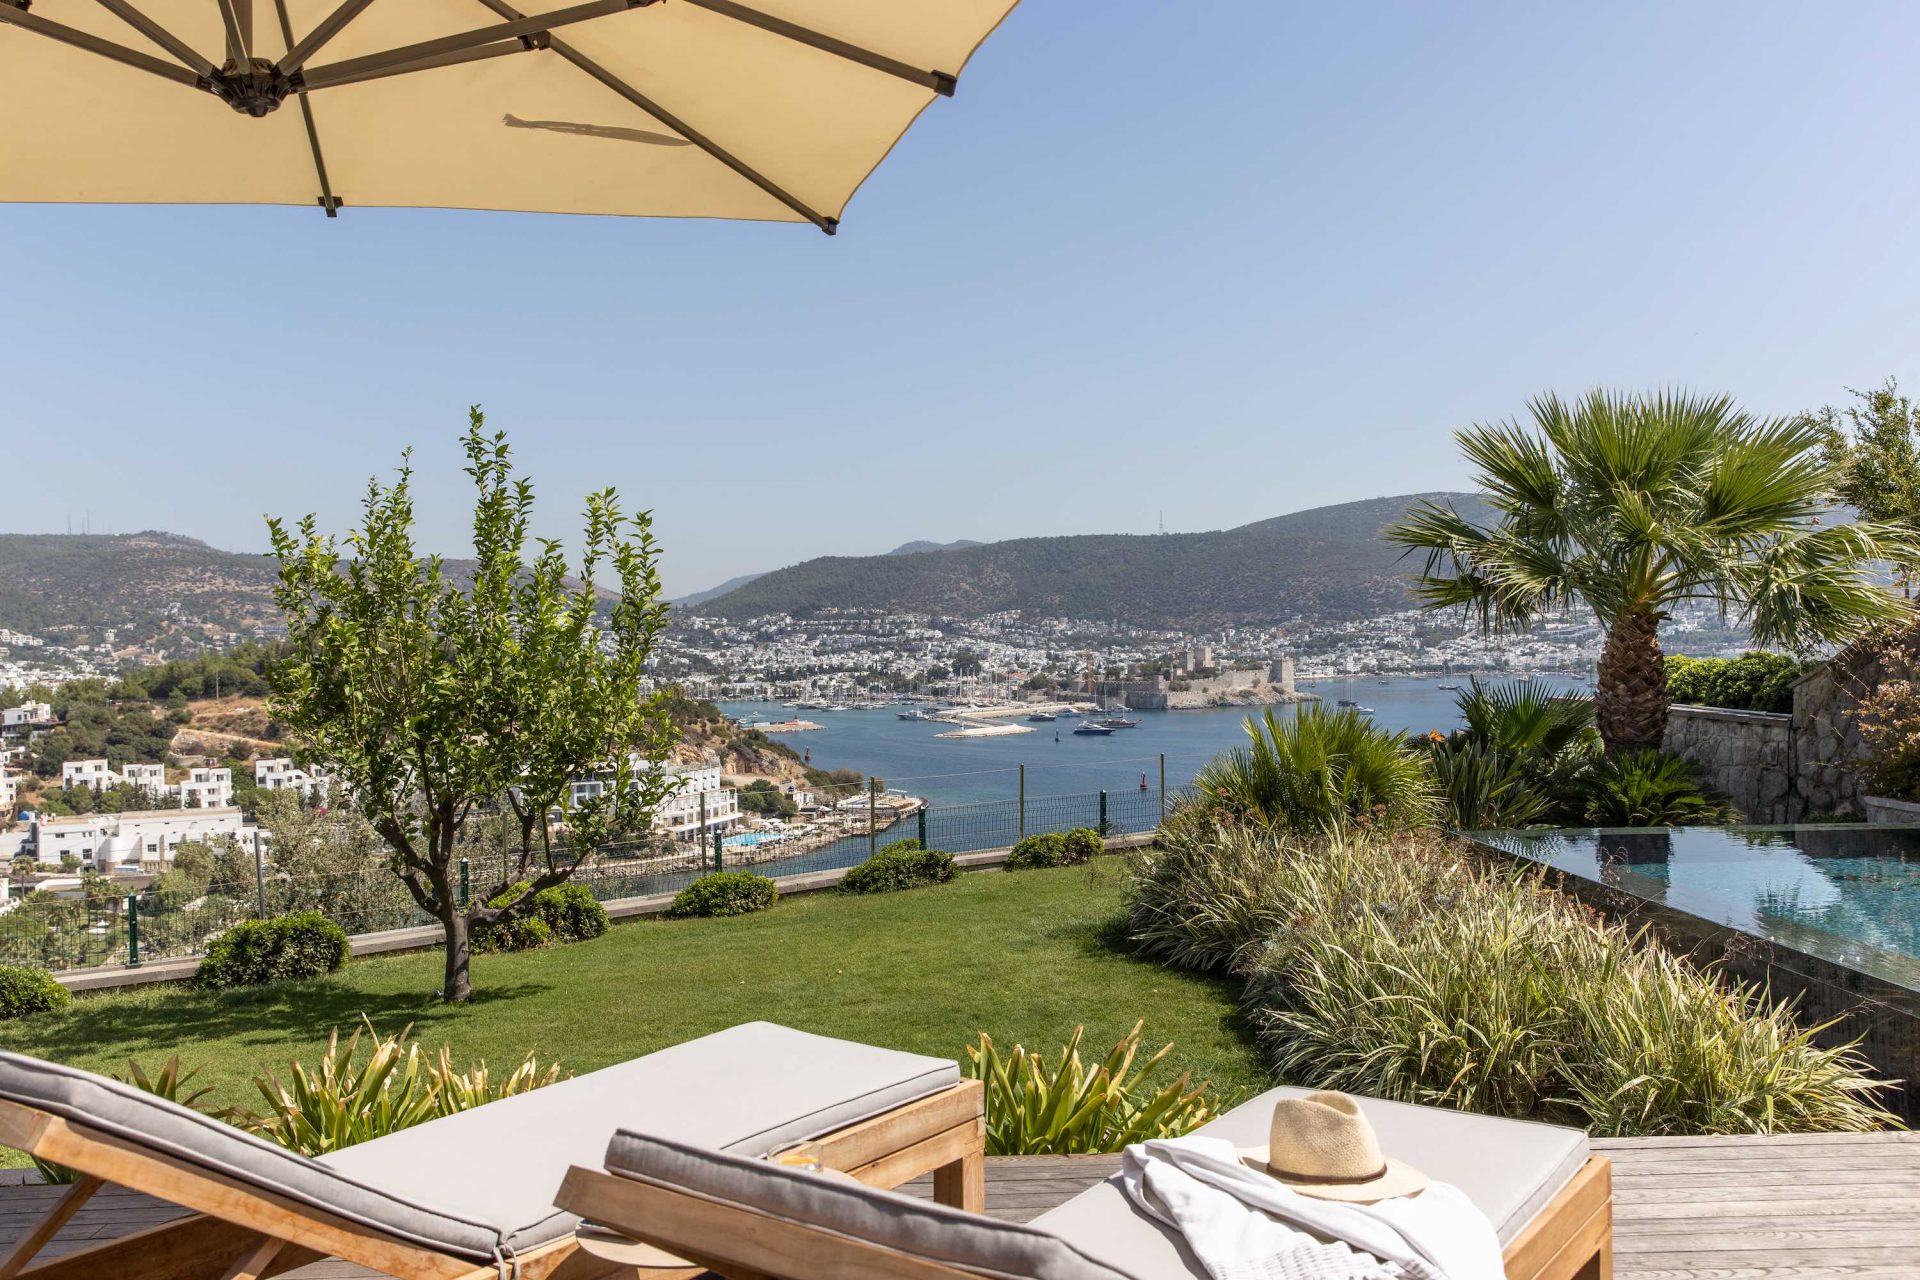 New METT Hotels &amp; Resorts brand to debut in Turkey – Business Traveller